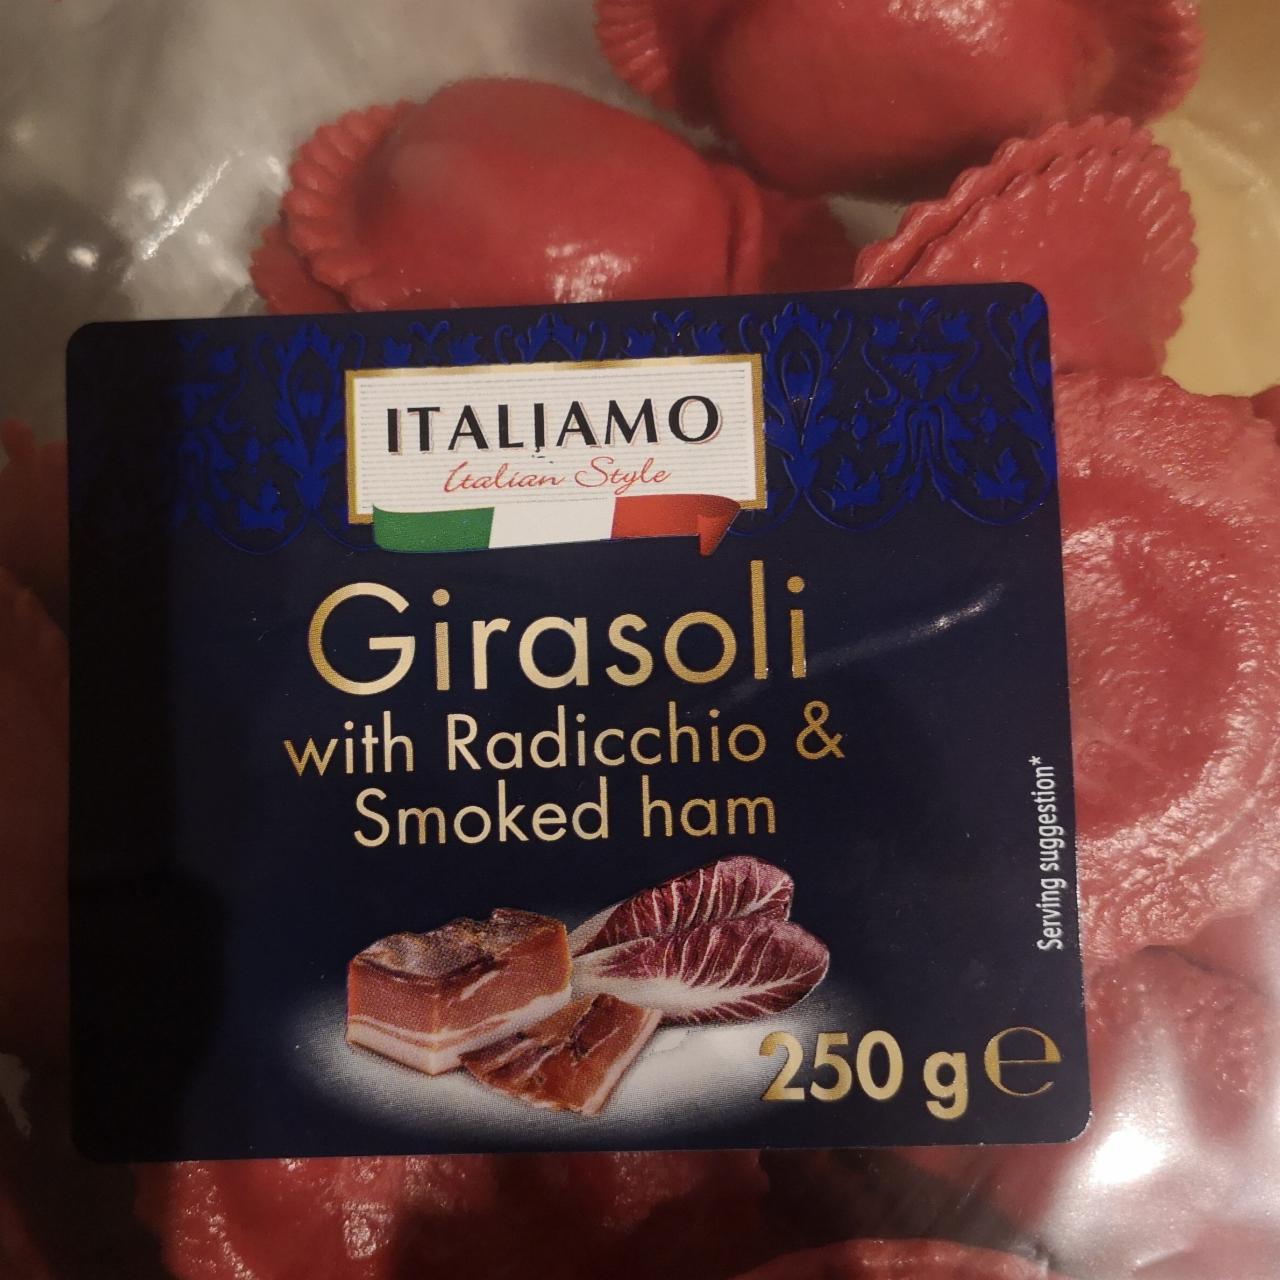 Fotografie - Girasoli with Radicchio & Smoked ham Italiamo